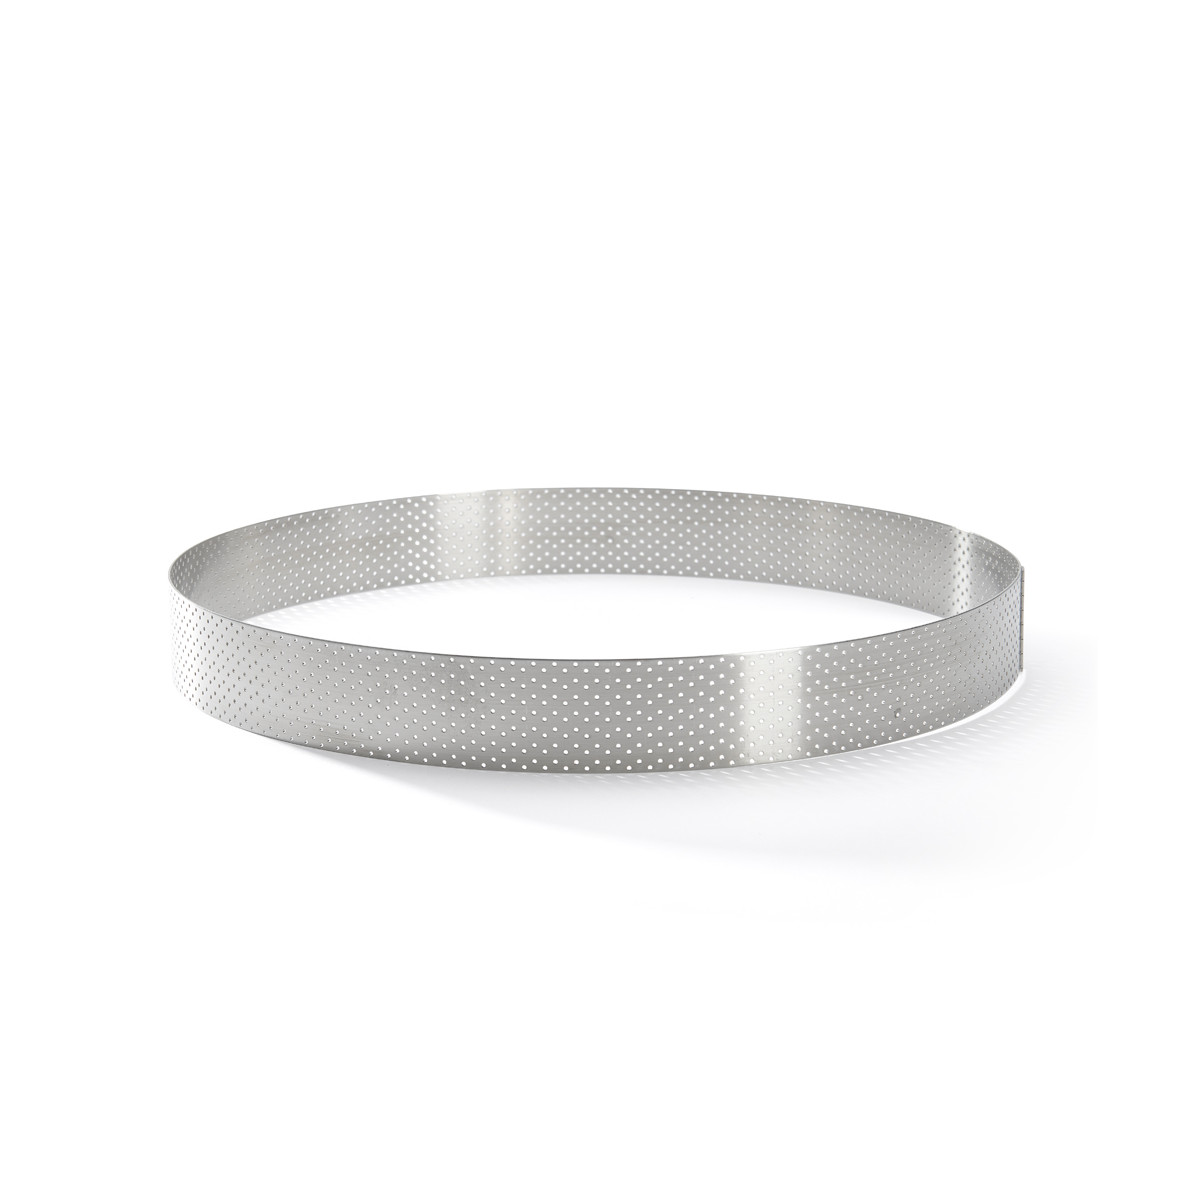 Round tart ring Ht 3,5 cm VALRHONA, perforated stainless steel ...